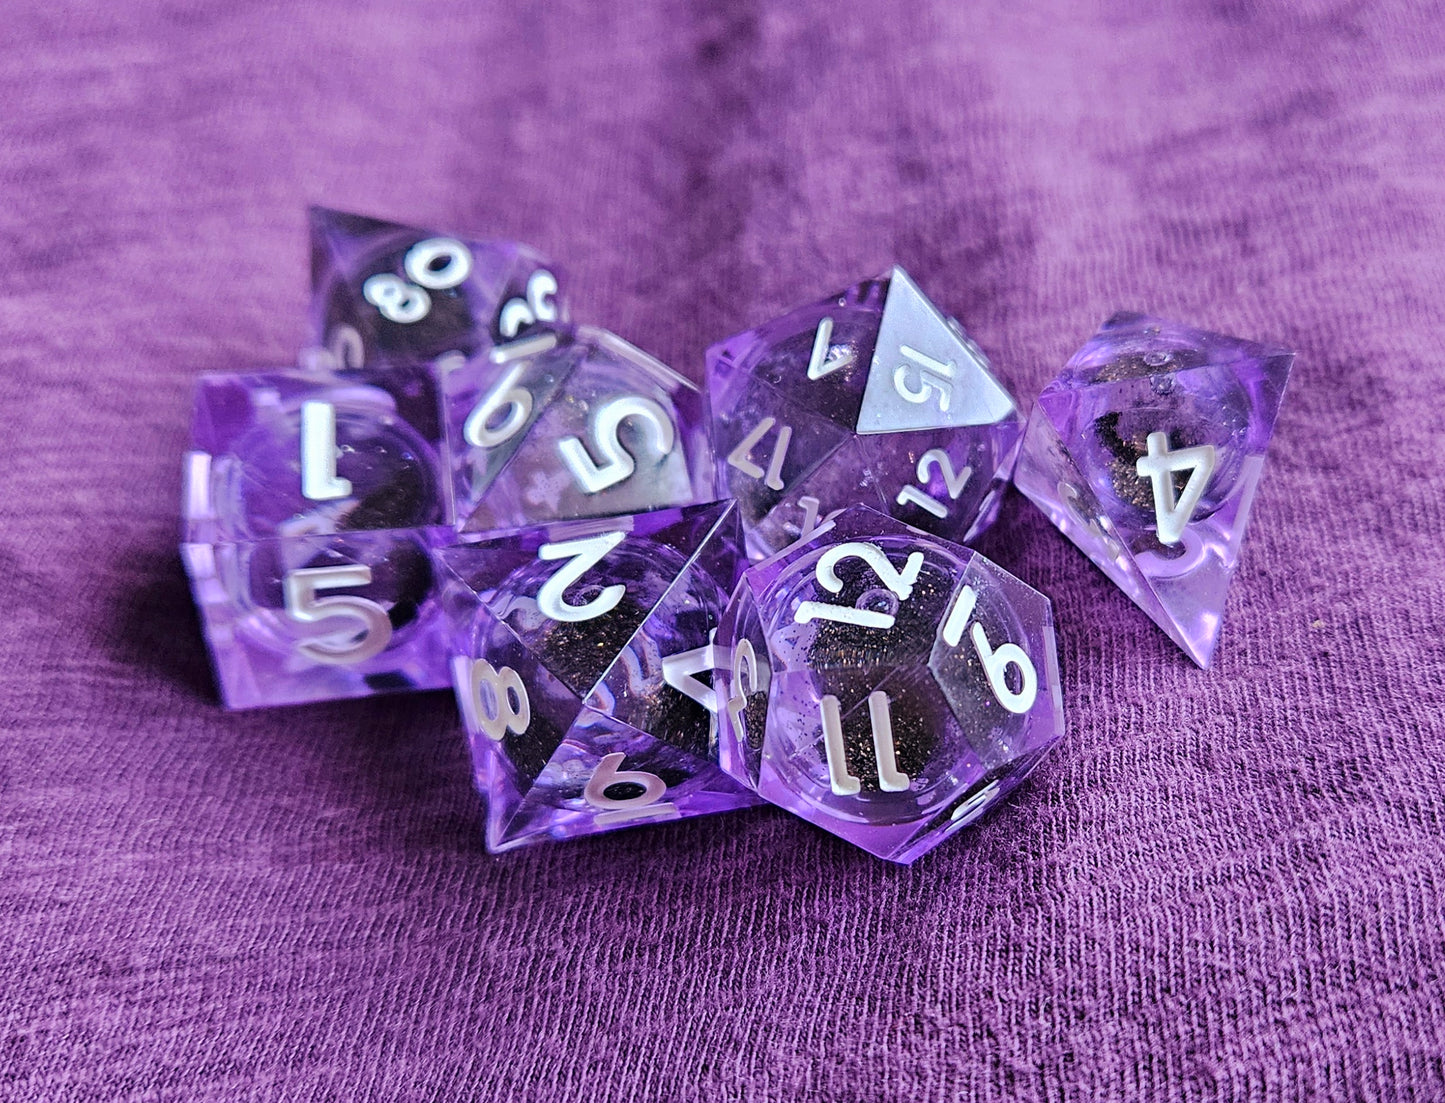 Liquid core purple dice